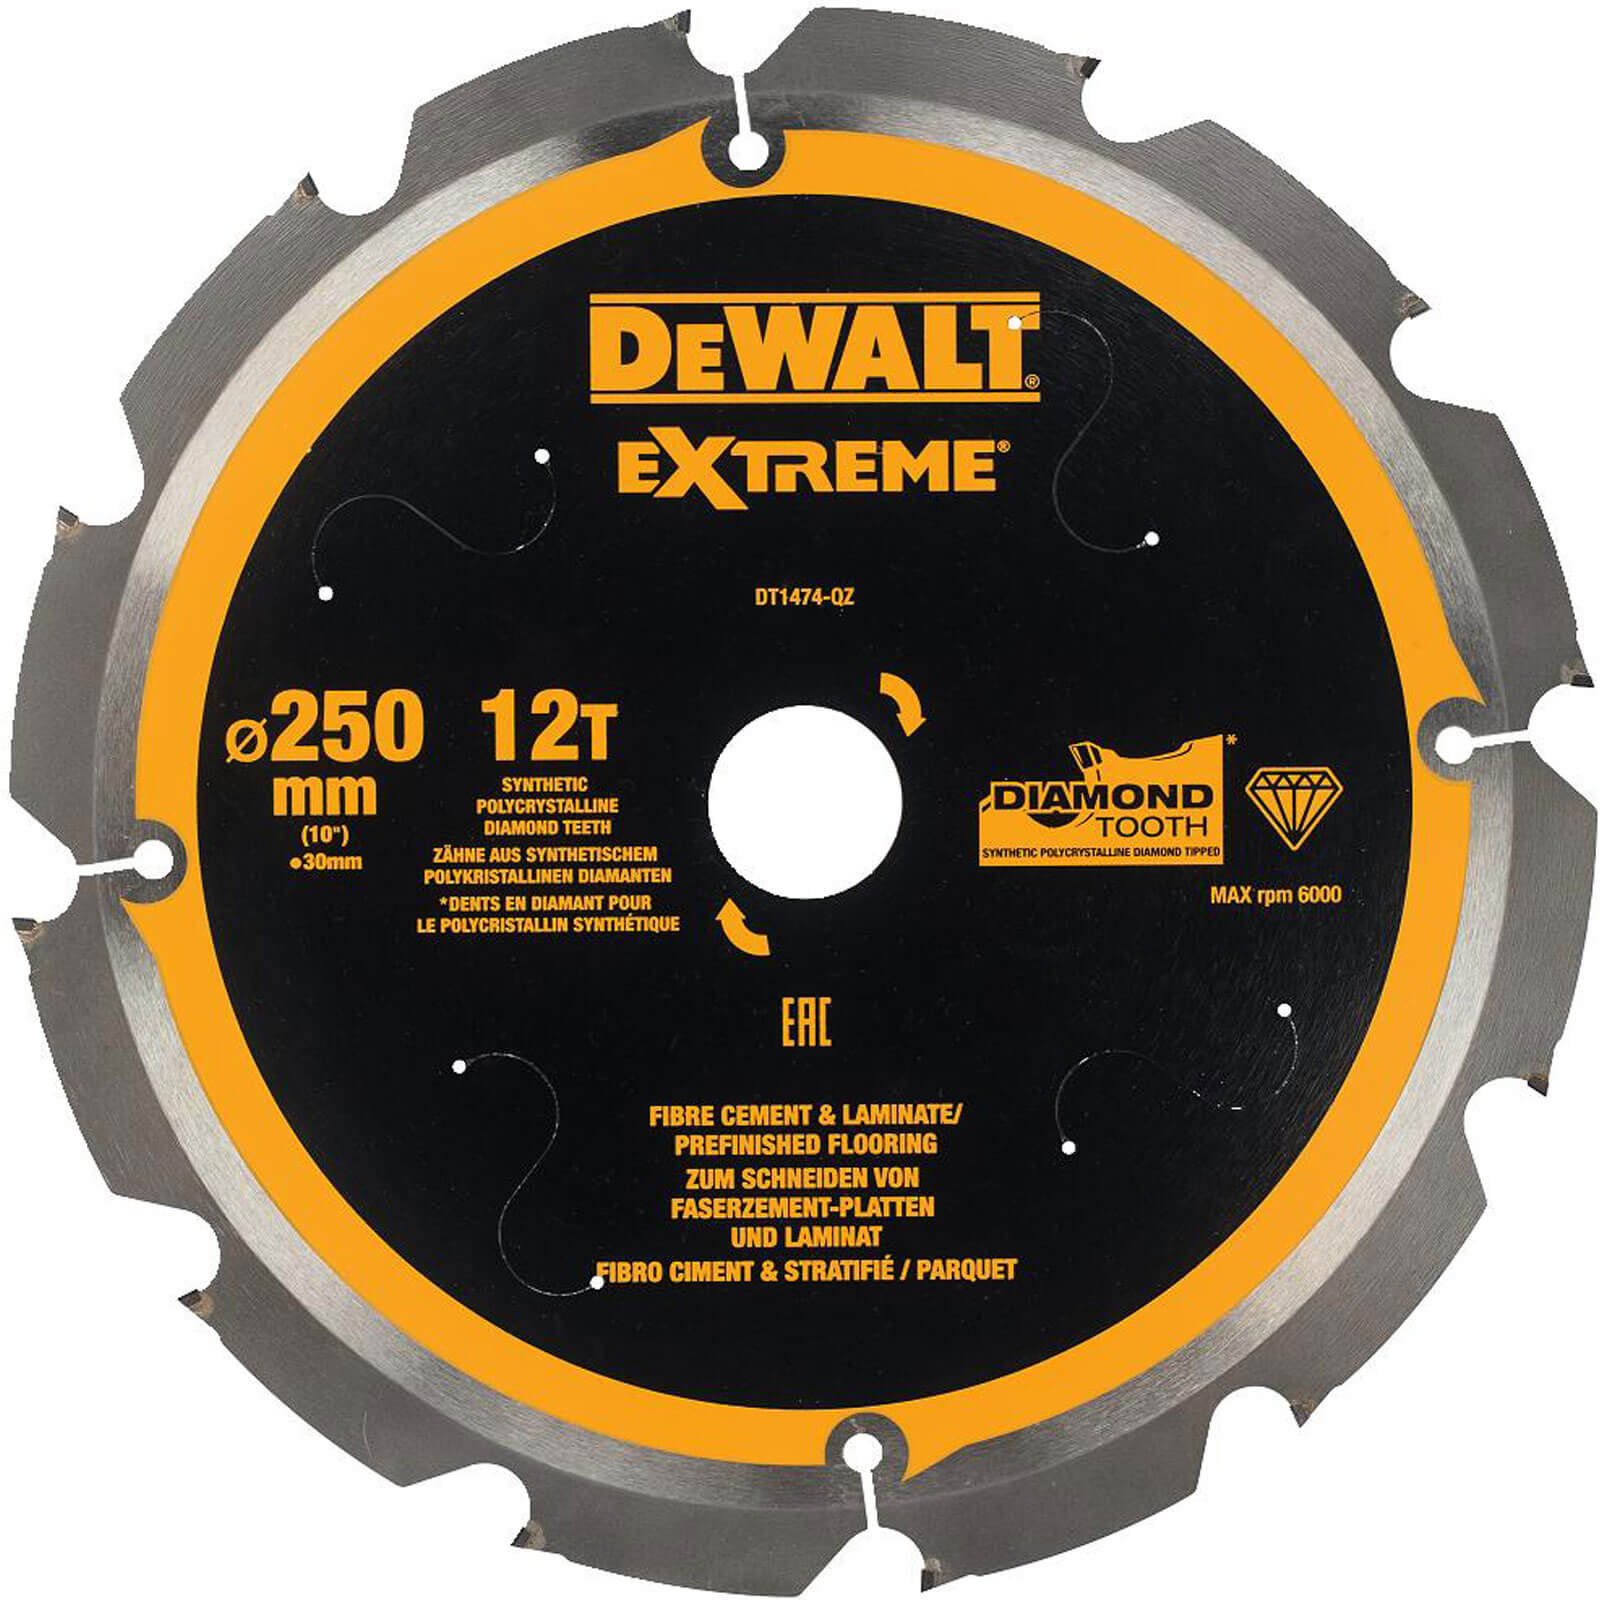 Image of DeWalt PCD Fibre Cement Saw Blade 250mm 12T 30mm